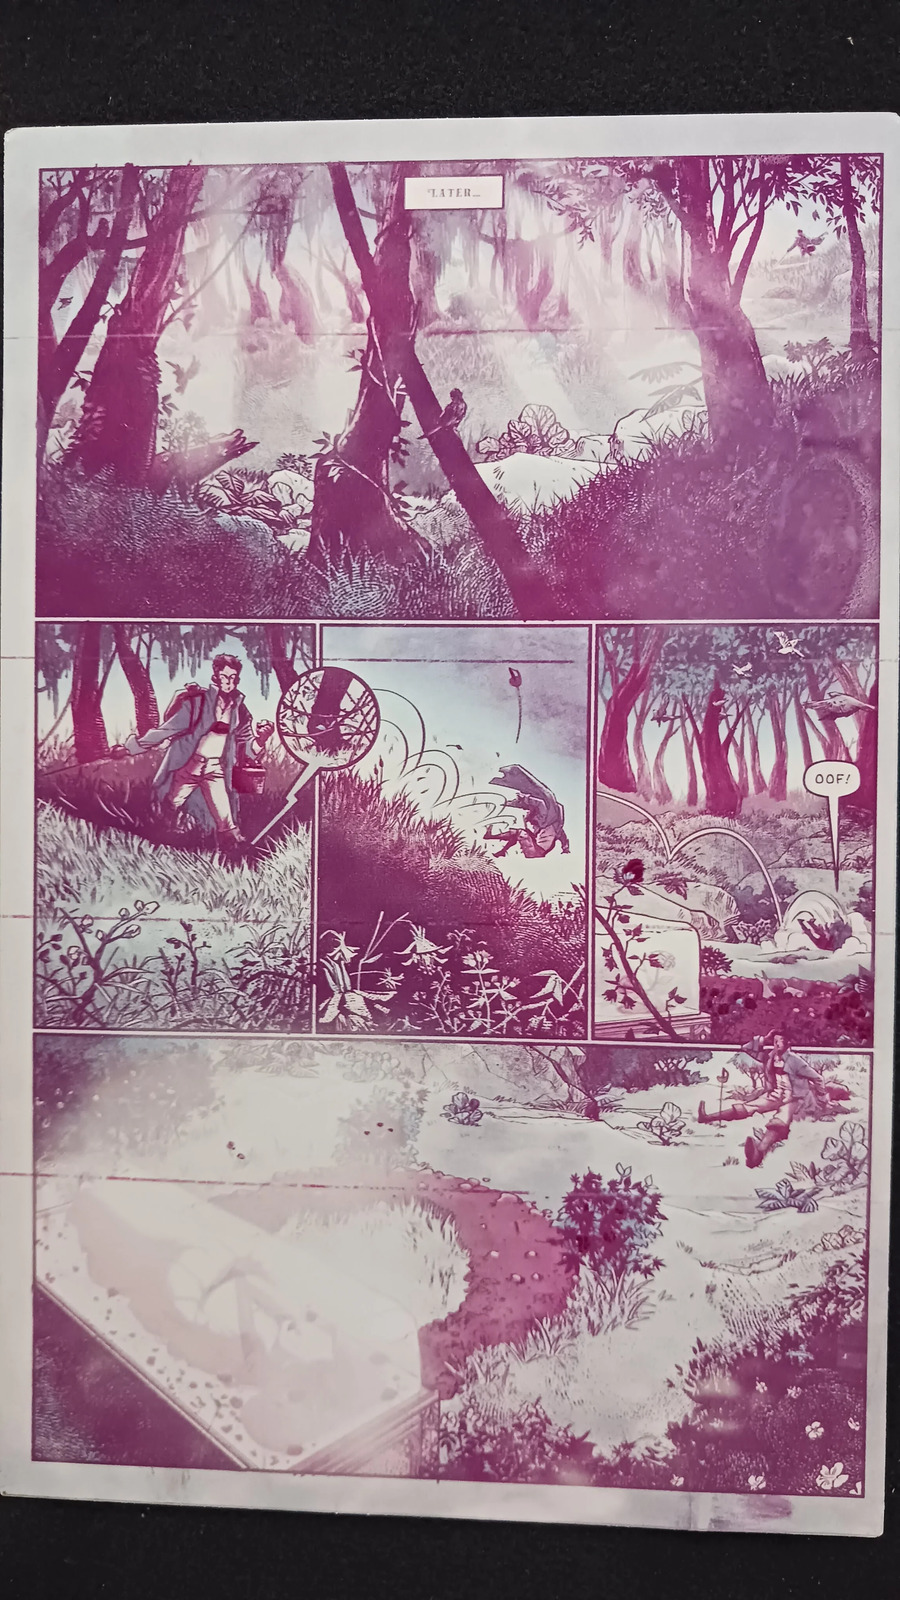 Snow White Zombie Apocalypse #1 - Page 17 - PRESSWORKS - Comic Art - Printer Pla